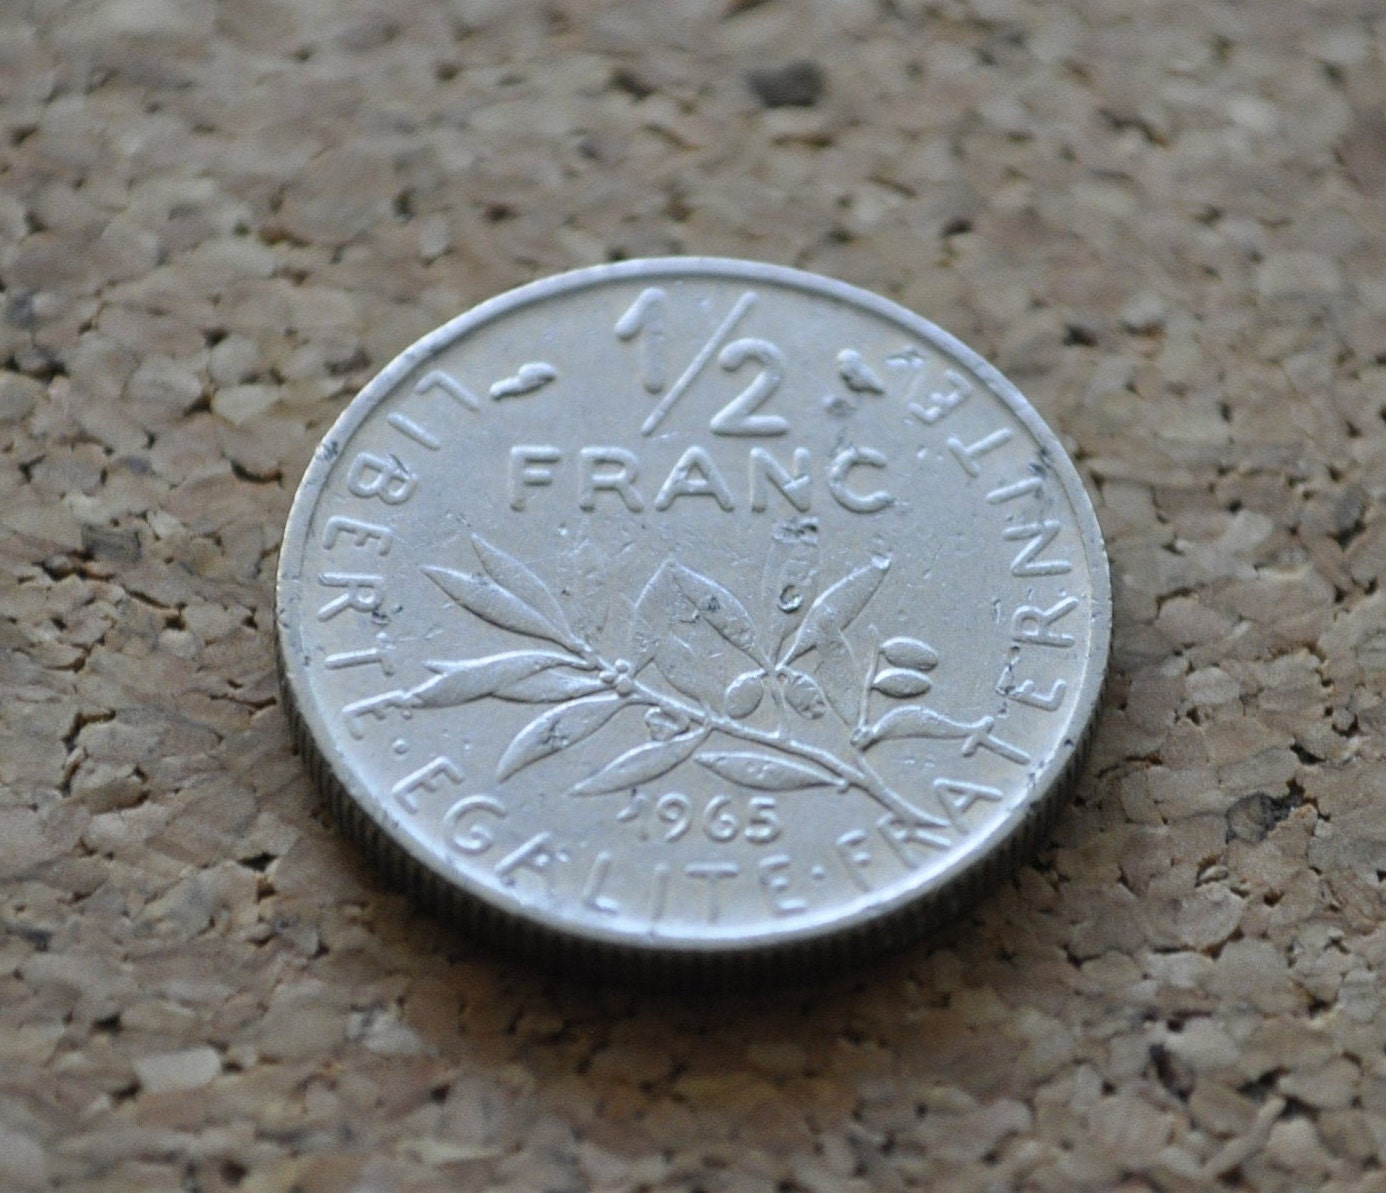 Vintage France 1/2 Franc Coin (1960s-1990s) - Half Franc Coin France - Olive Branch Design - Numismatic Collectible